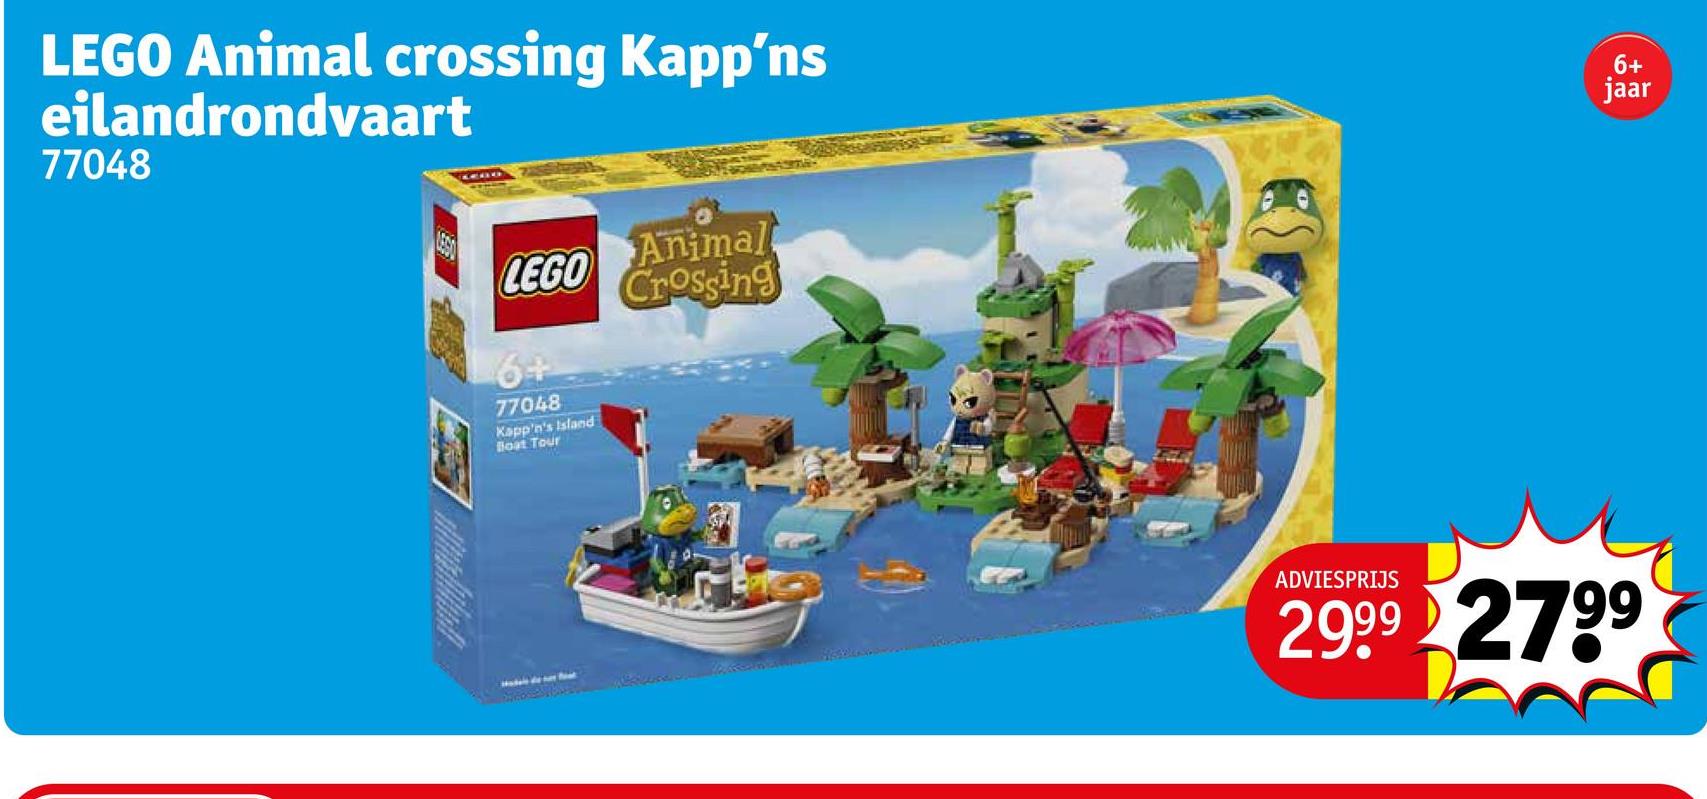 LEGO Animal crossing Kapp'ns
eilandrondvaart
77048
6+
jaar
LEGO
6+
77048
Kapp'n's Island
Boat Tour
feat
Animal
Crossing
ADVIESPRIJS
2999 2799